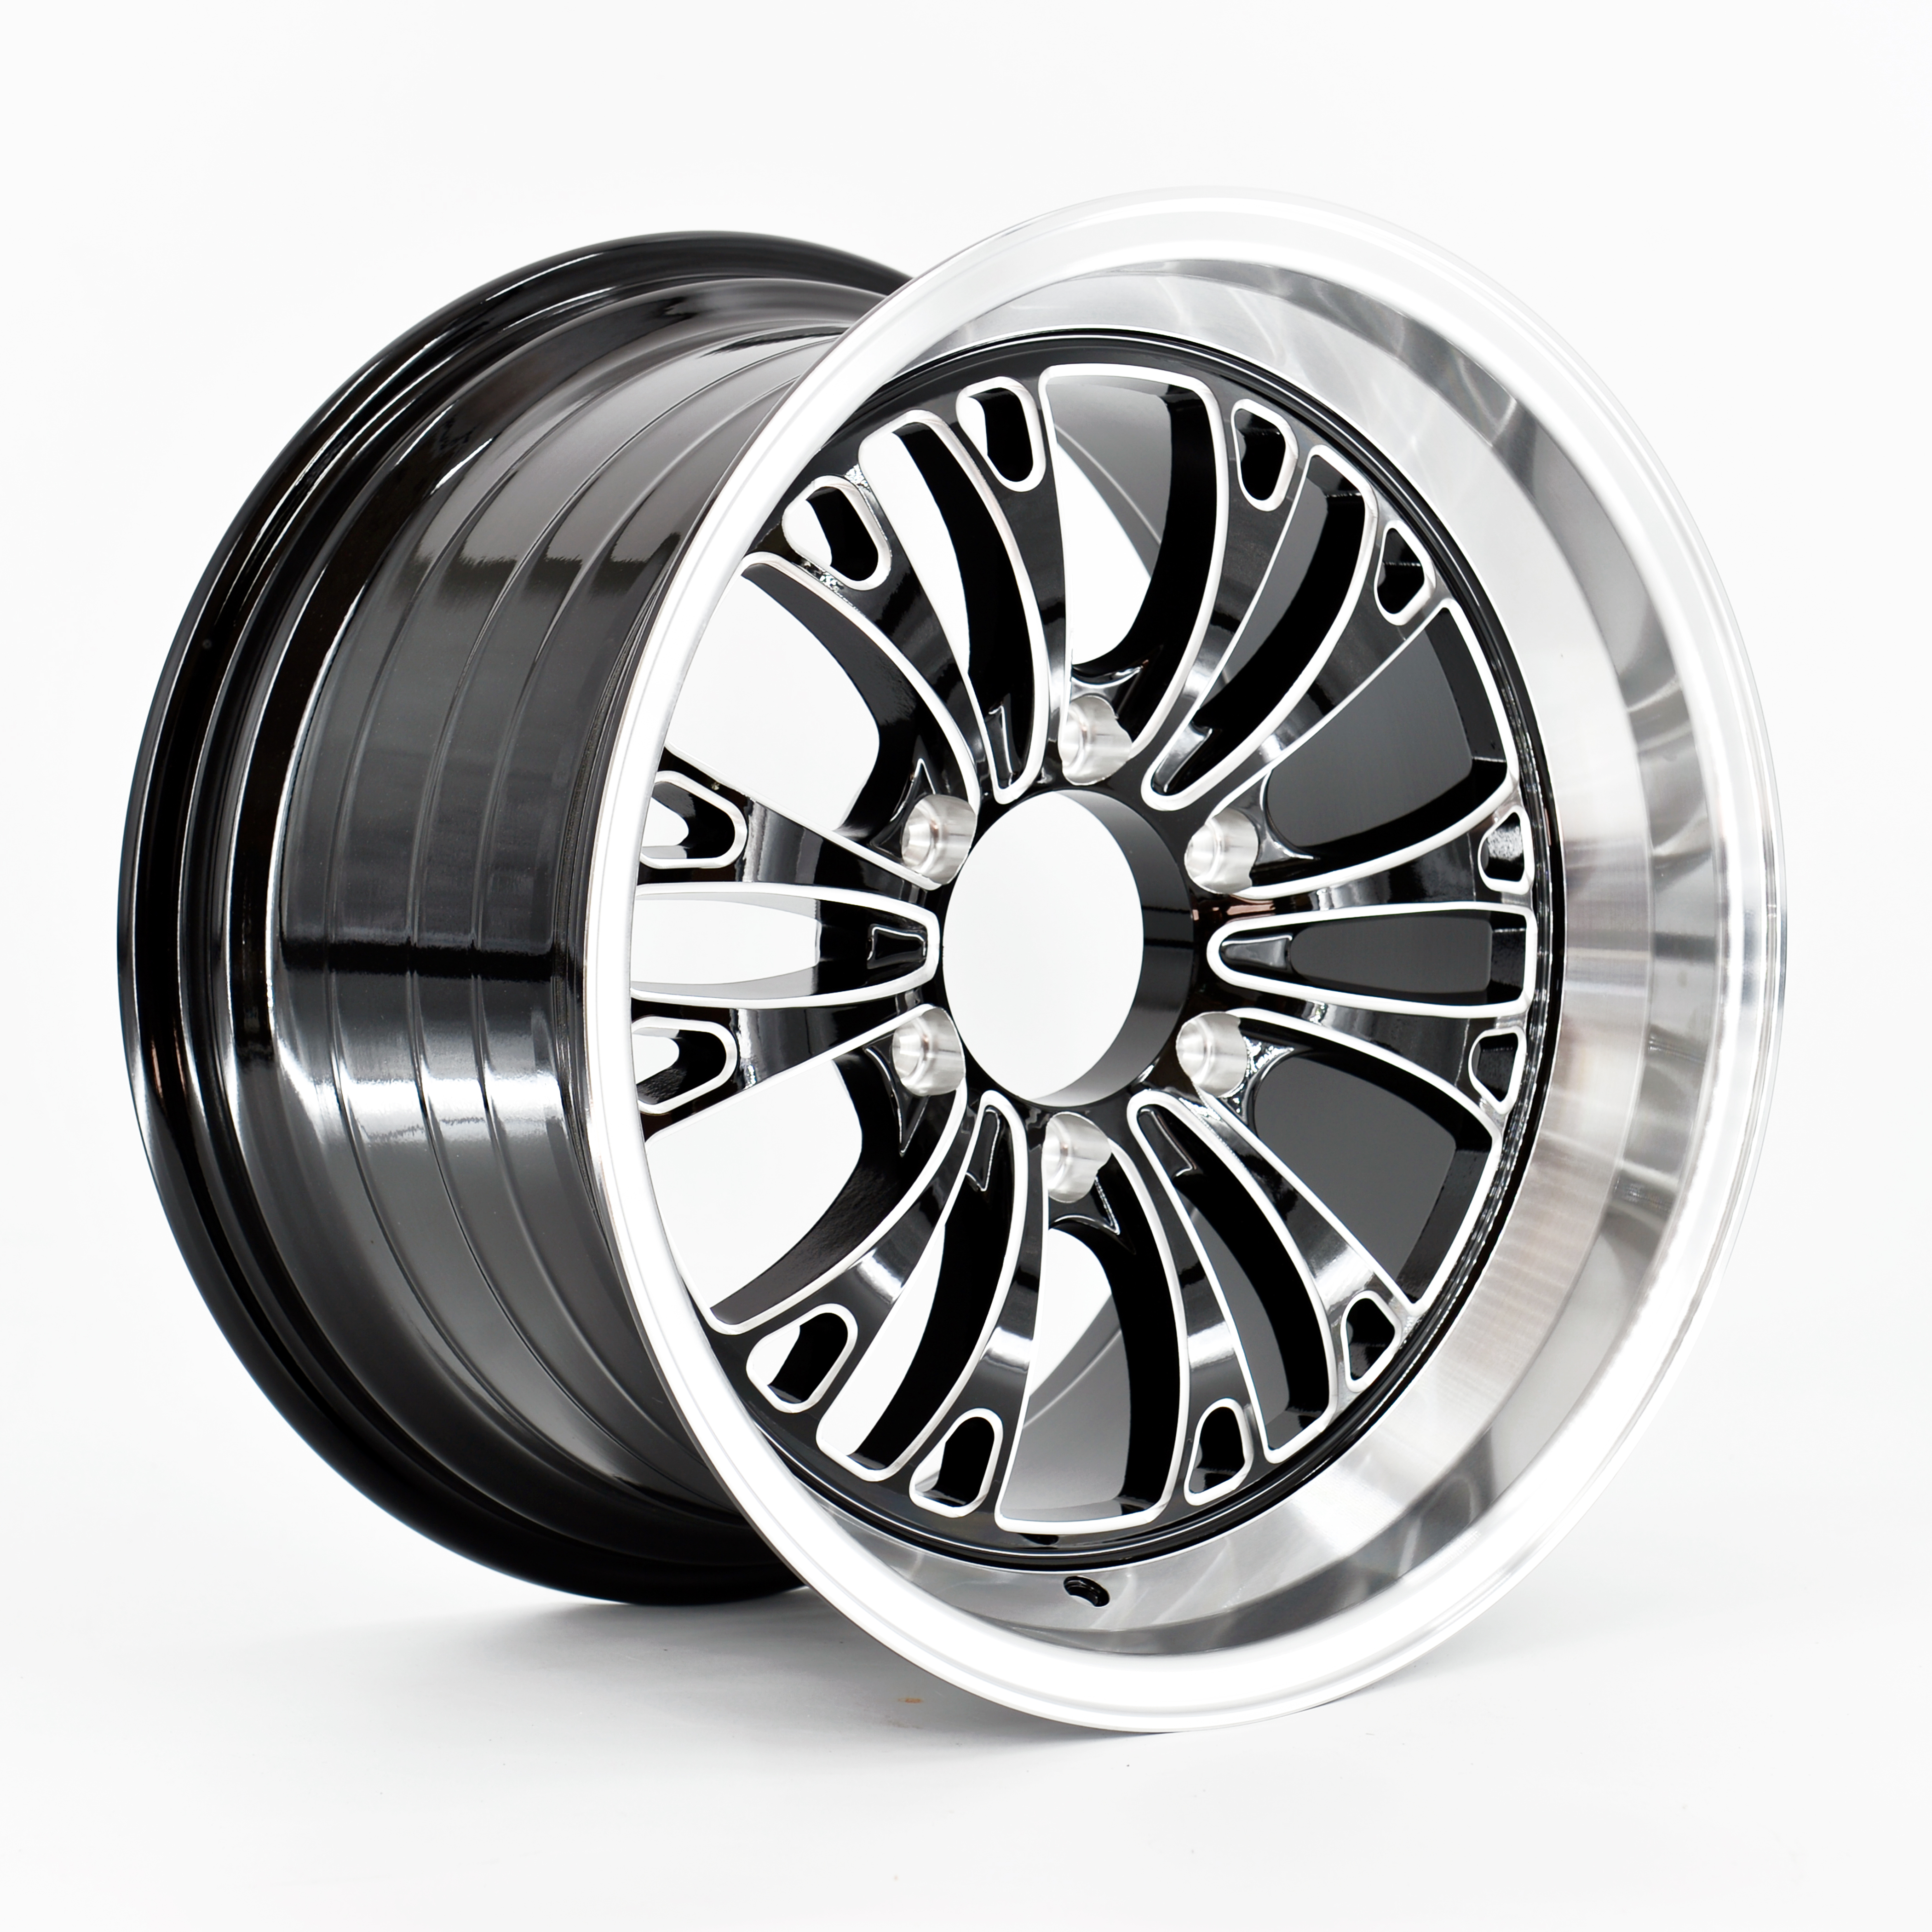 High quality 651 Off-Road Car Alloy Wheel 18 inch 6×139.7mm Machine Face Aluminum Alloy Wheel